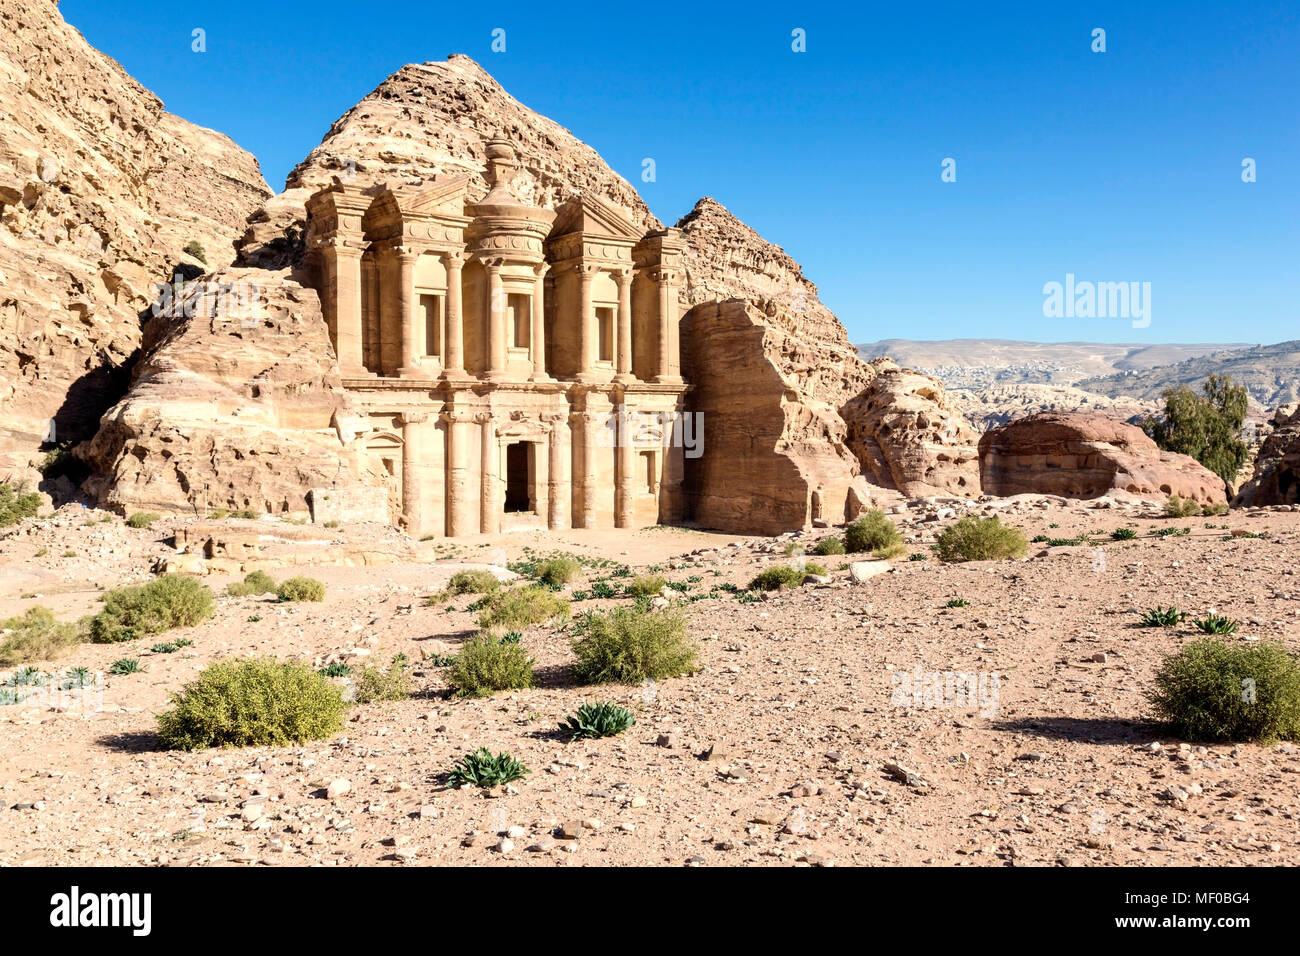 The Monastery Al Deir in Petra, Jordan Stock Photo